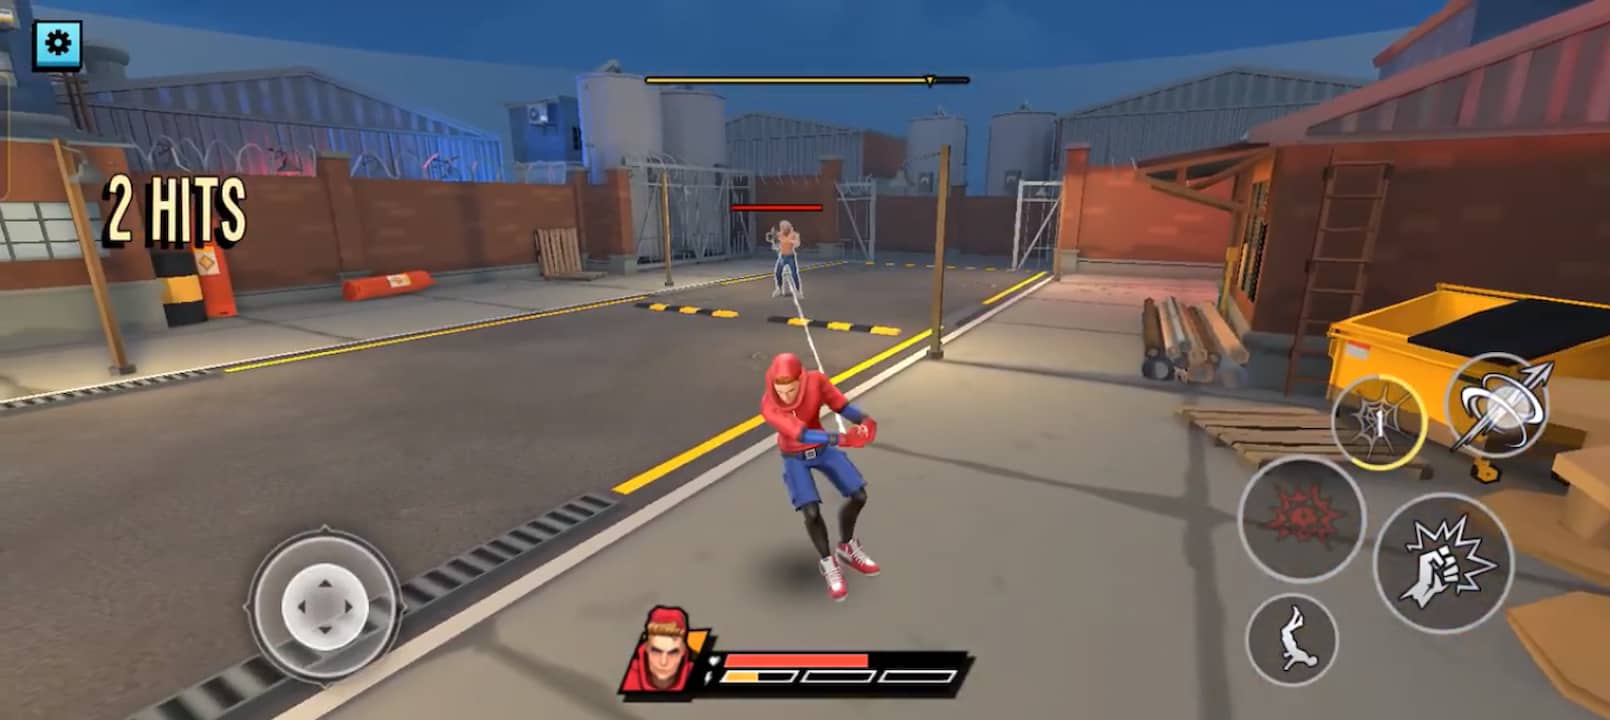 Tai Spider Fighter 2 Mod